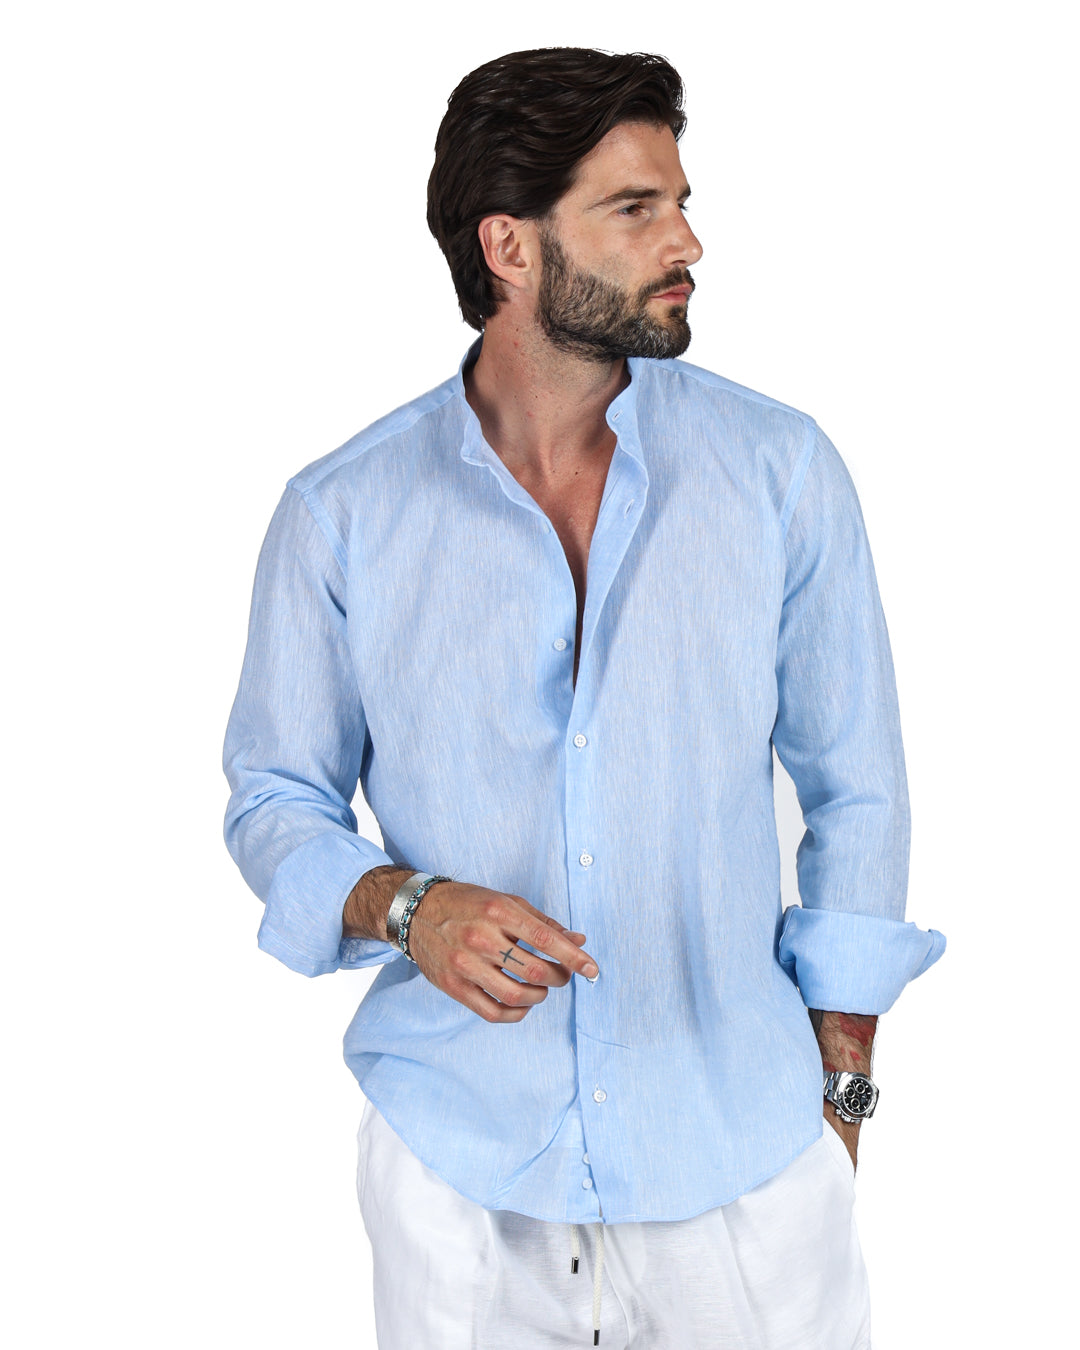 Positano - Light blue Korean linen shirt